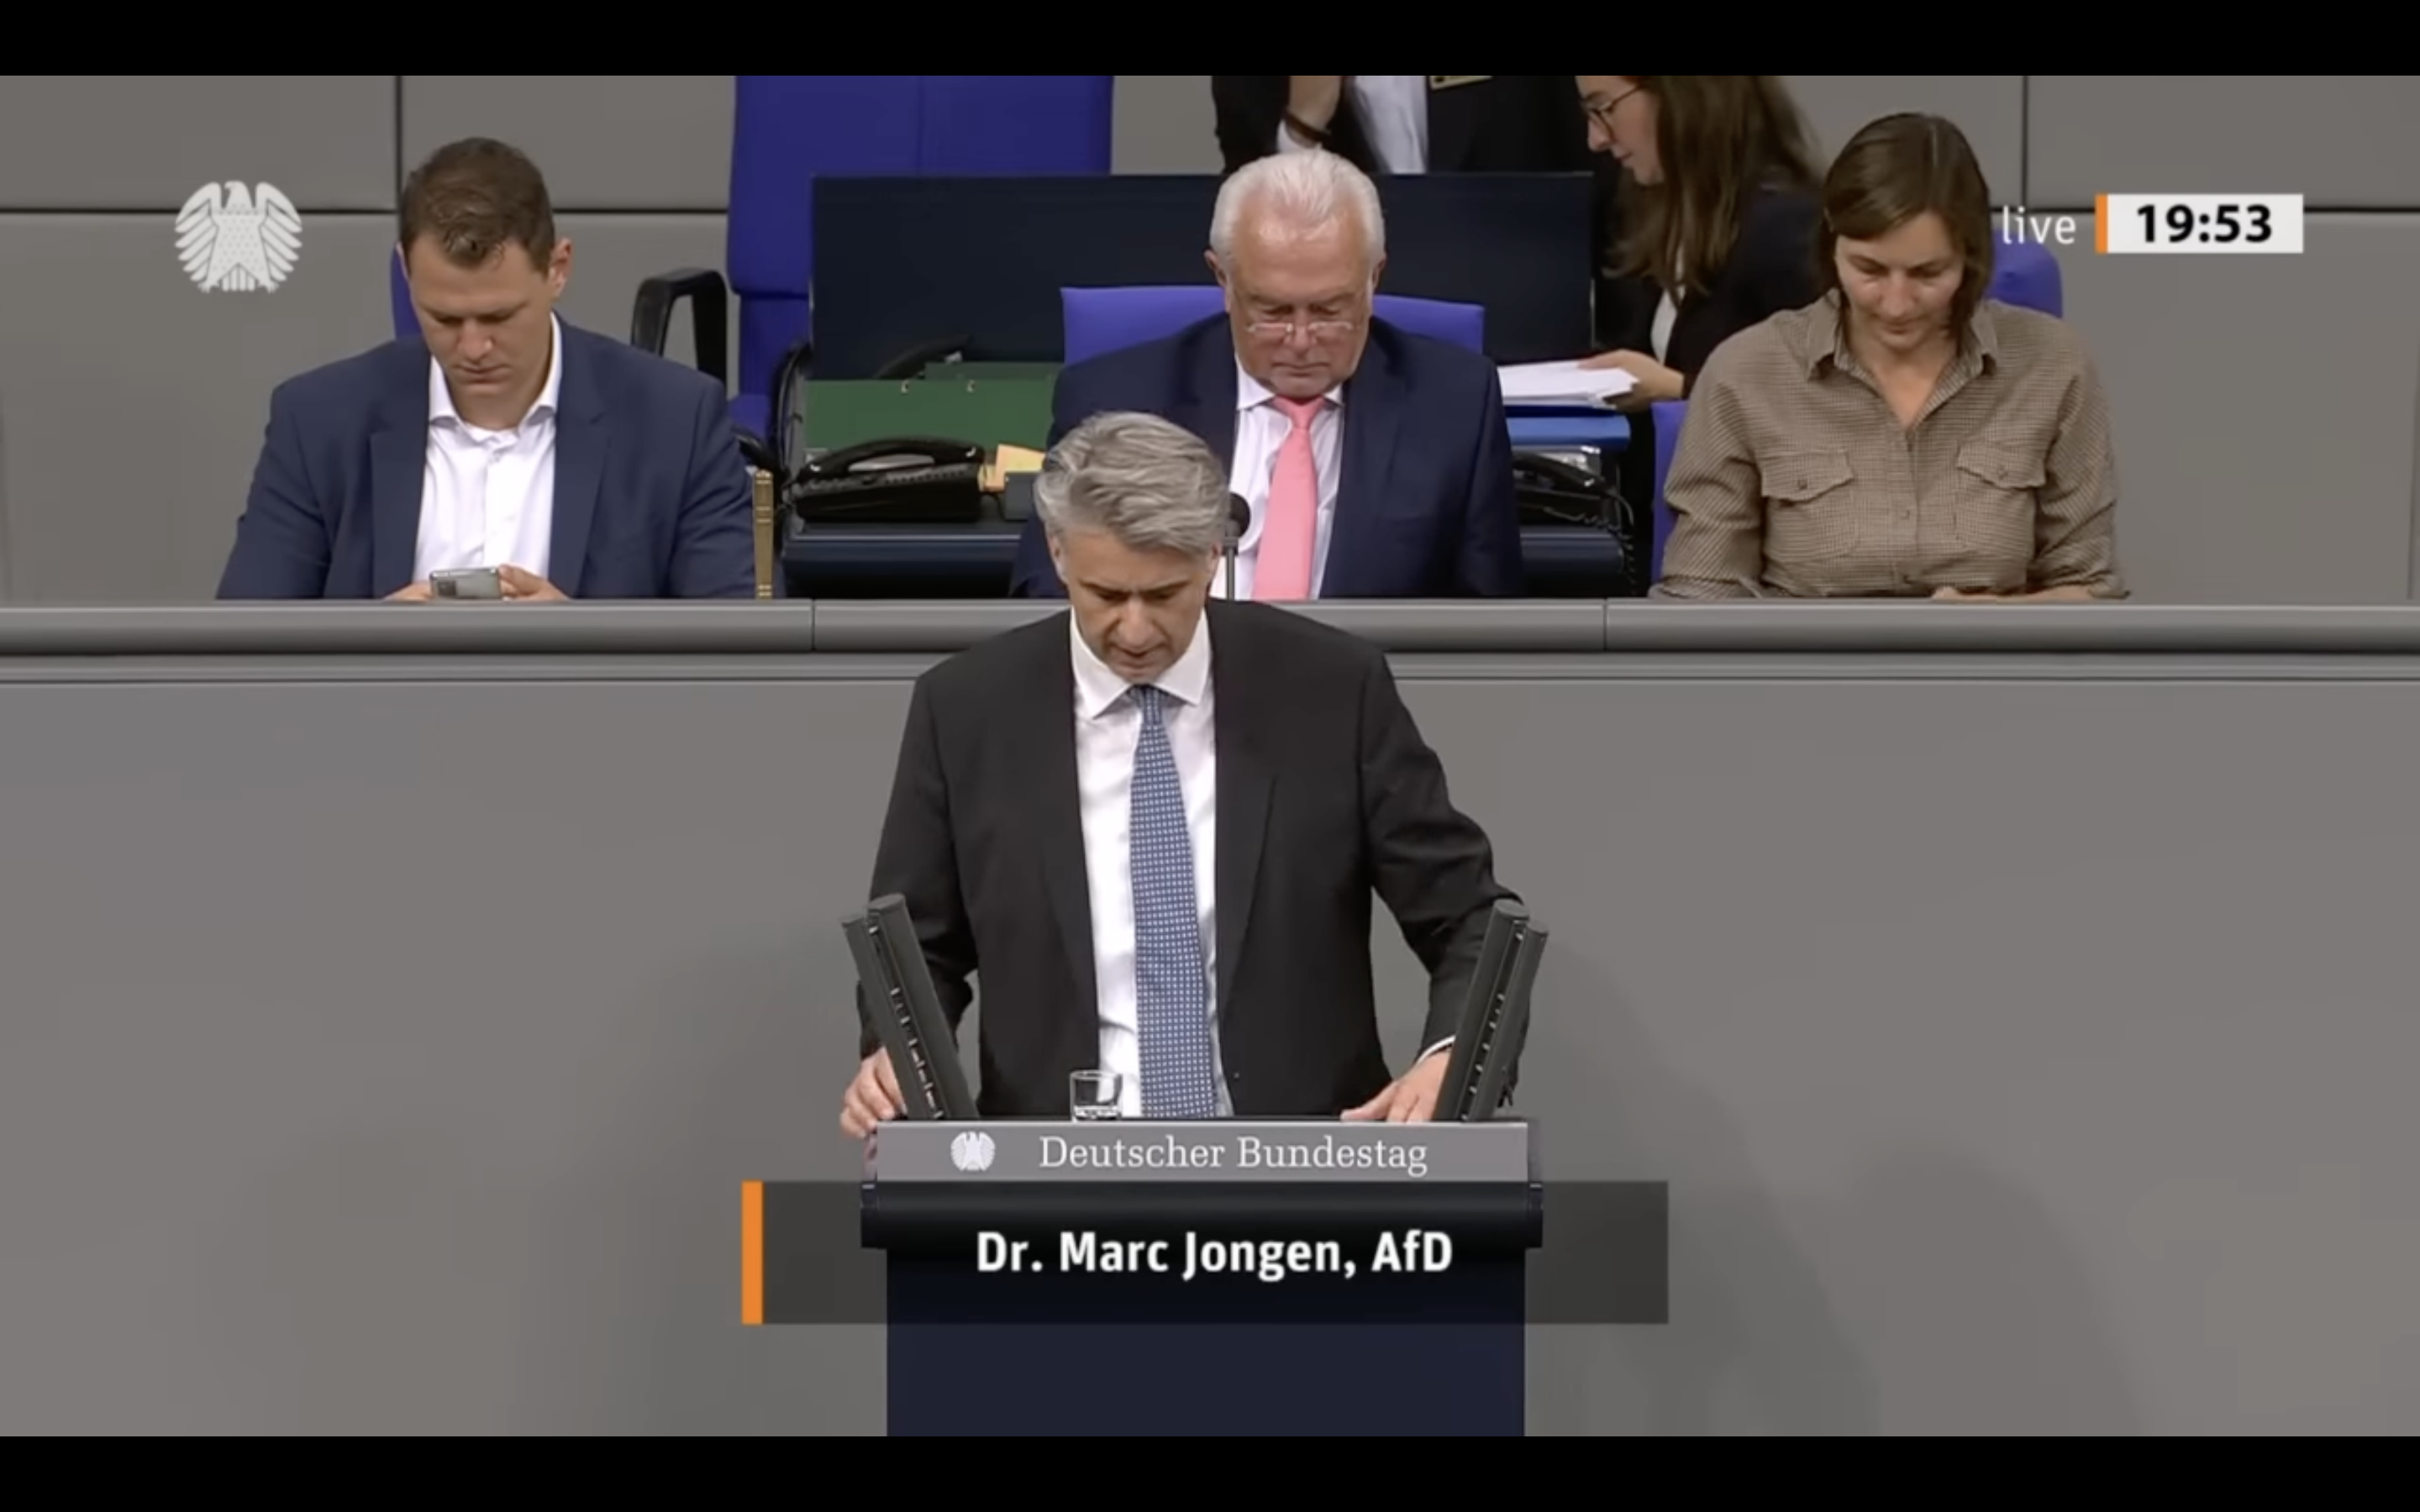 Bundestag debate about antisemitism scandal at documenta fiftee, Thursday, July 7, 2022.